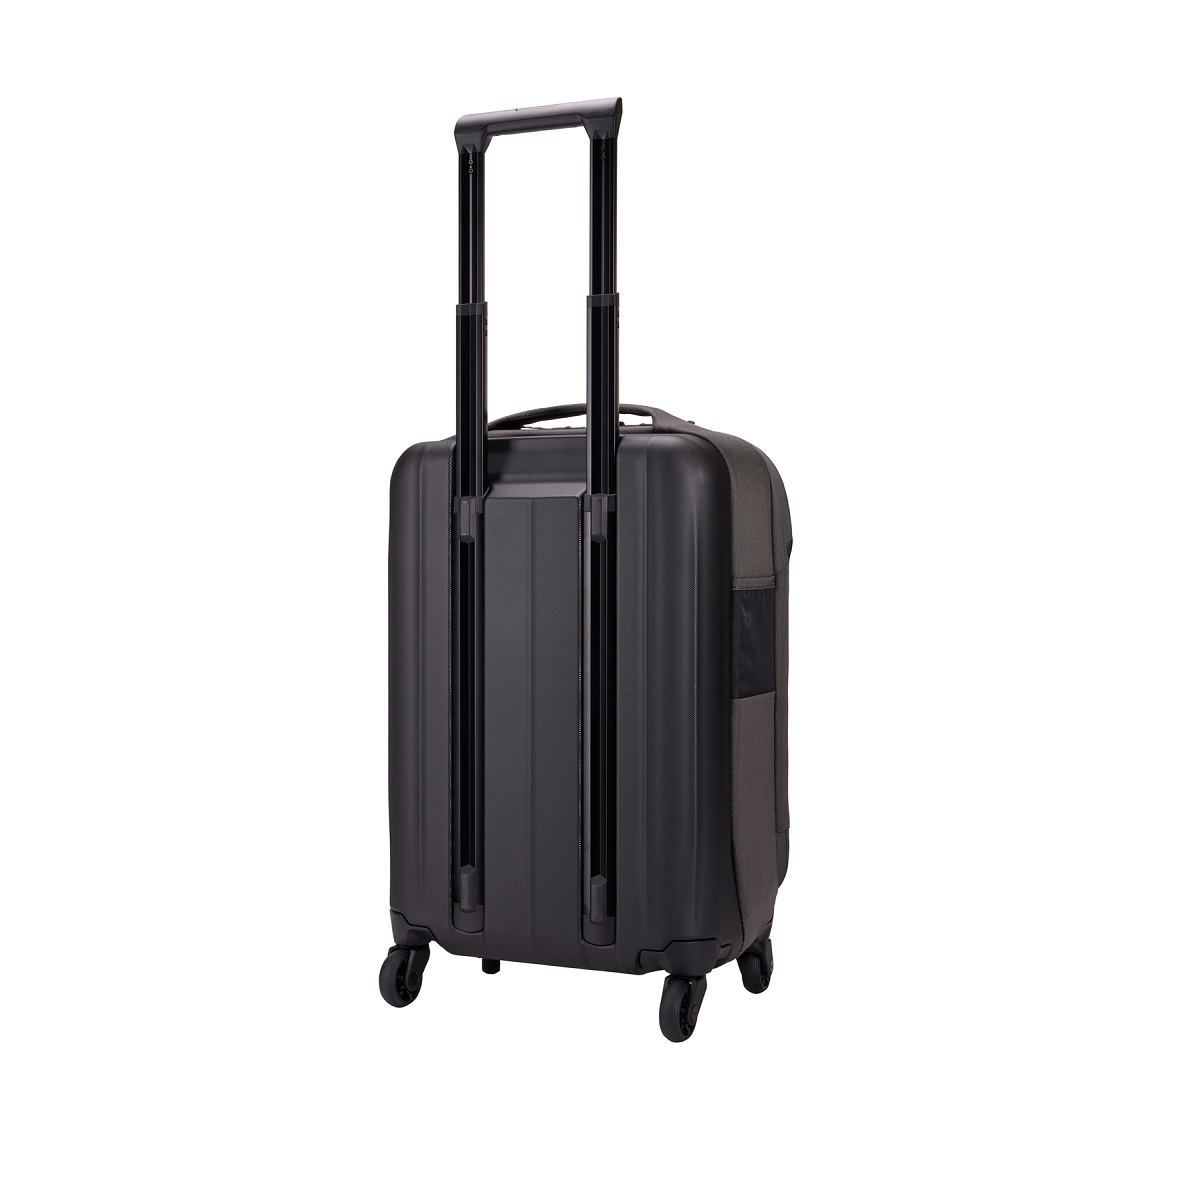 Thule Subterra 2 kofer s kotačima 55cm/35L CarryOn za unos ručne prtljage u zrakoplov - smeđi